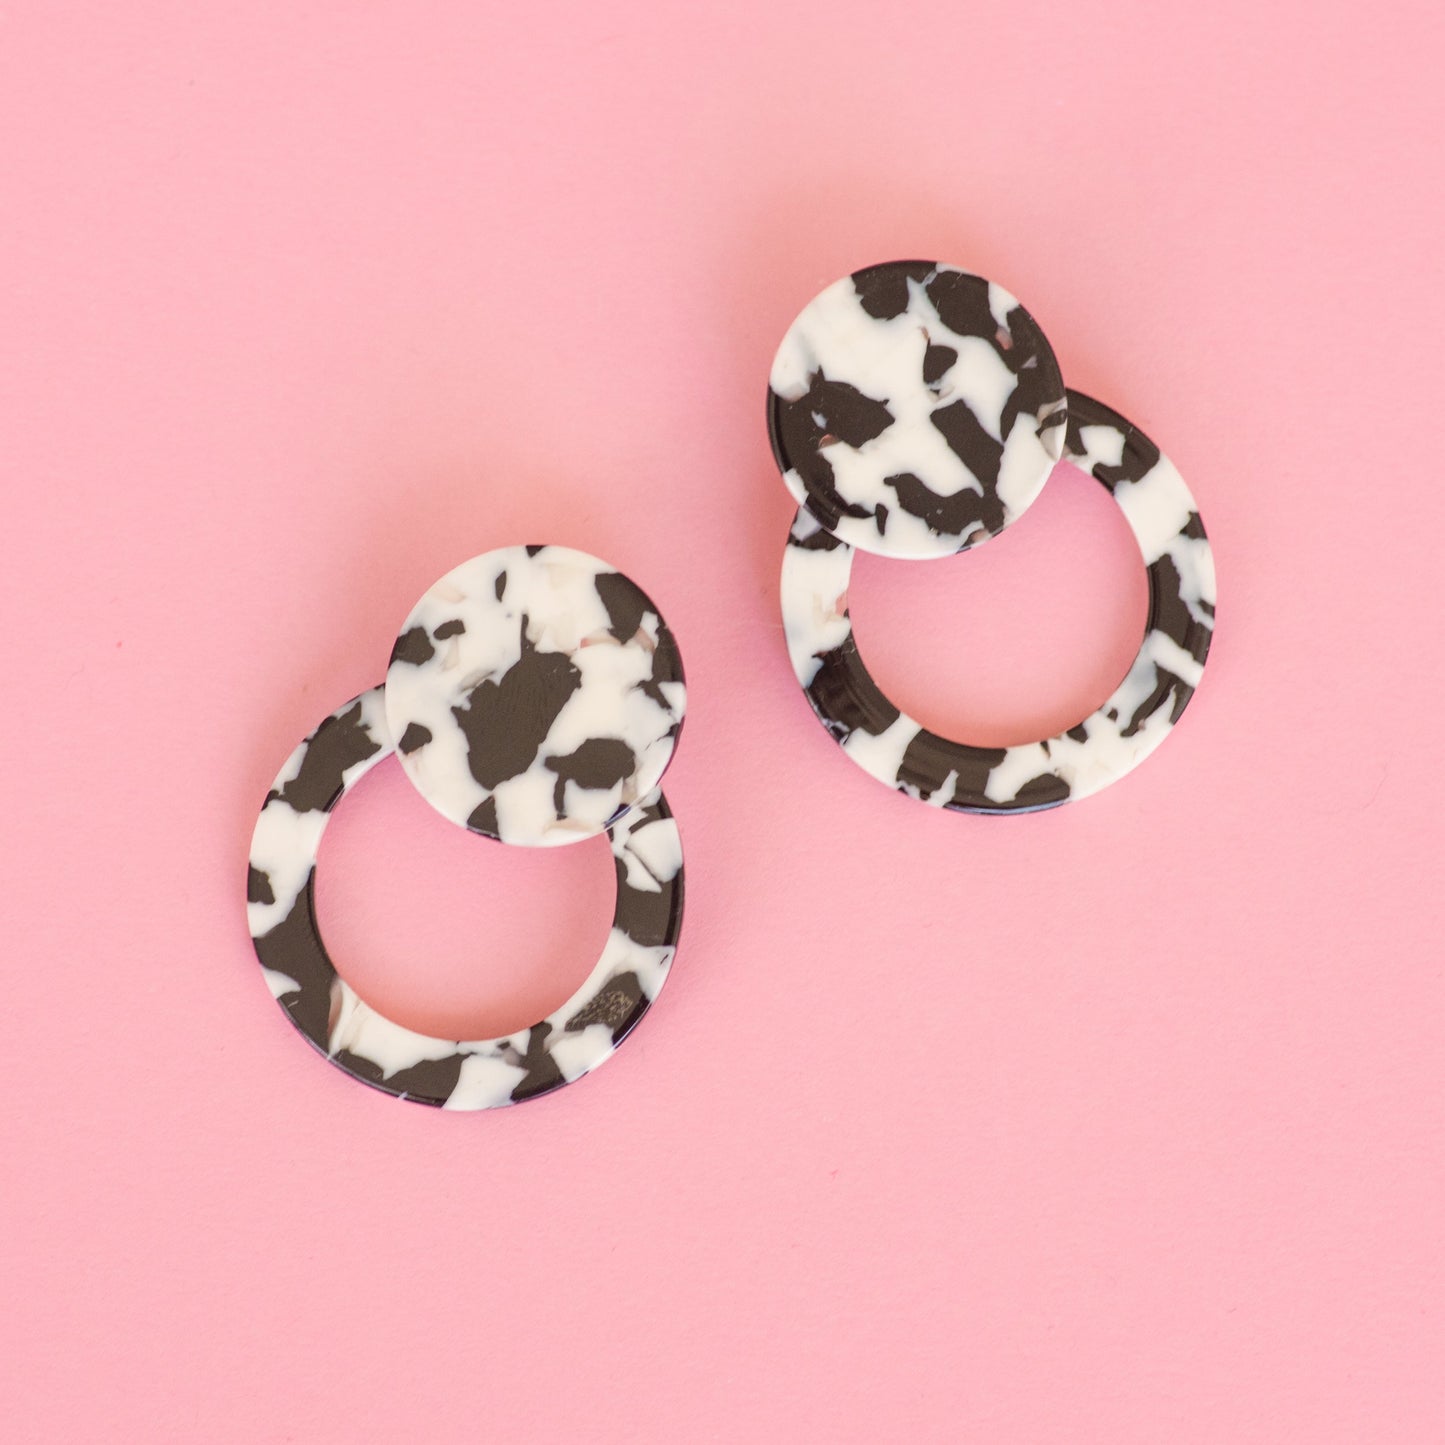 Black + White Tortoise Double Circle Earrings - Closed Caption | Shop Vintage + Handmade. Always Sustainable. Never Wasteful.